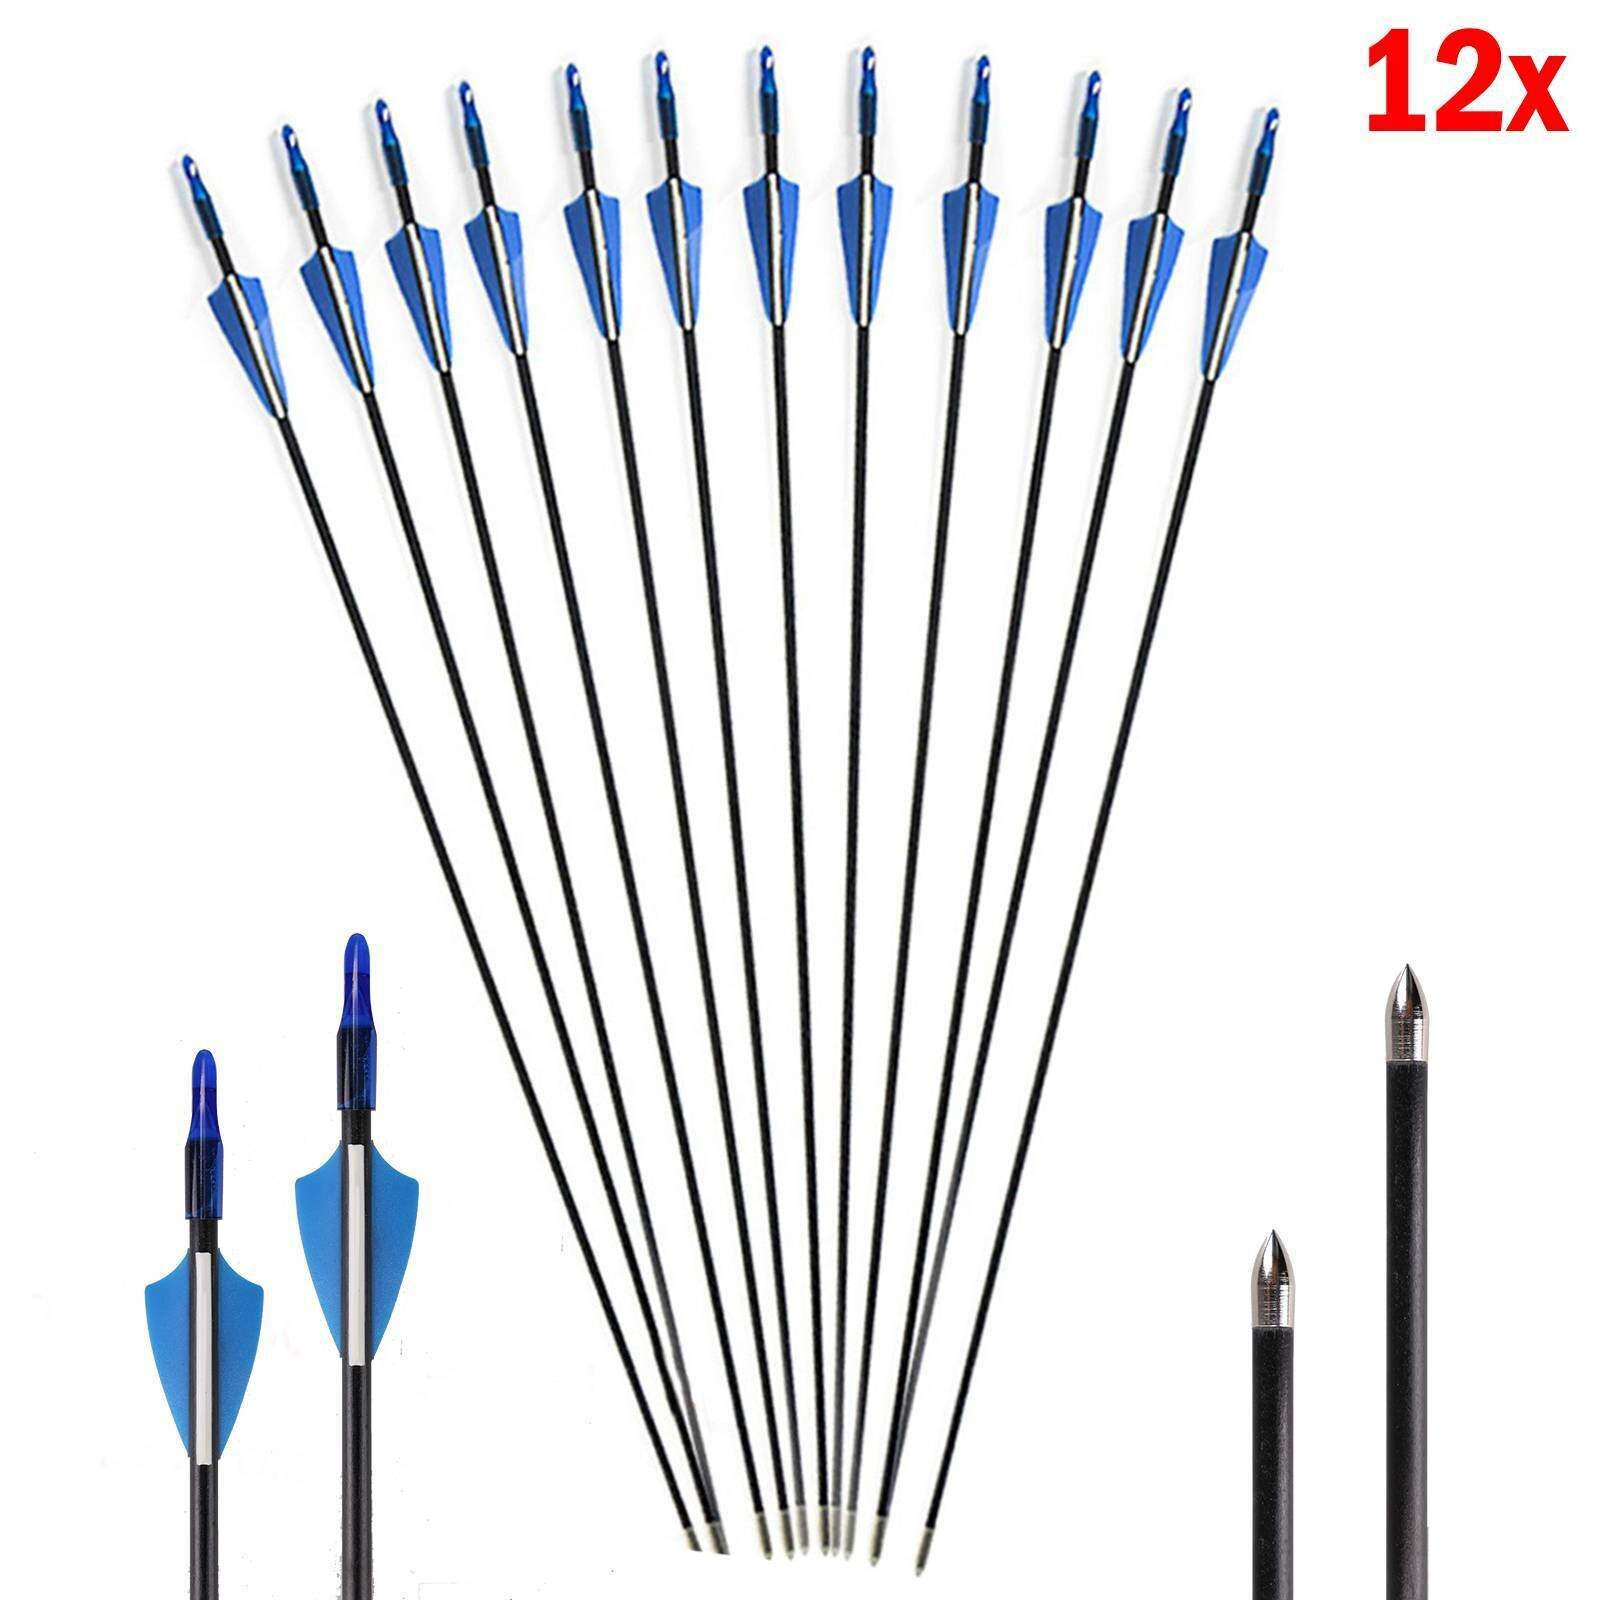 12 X 30" Fibreglass Field Point Archery Arrows Compound Or Recurve